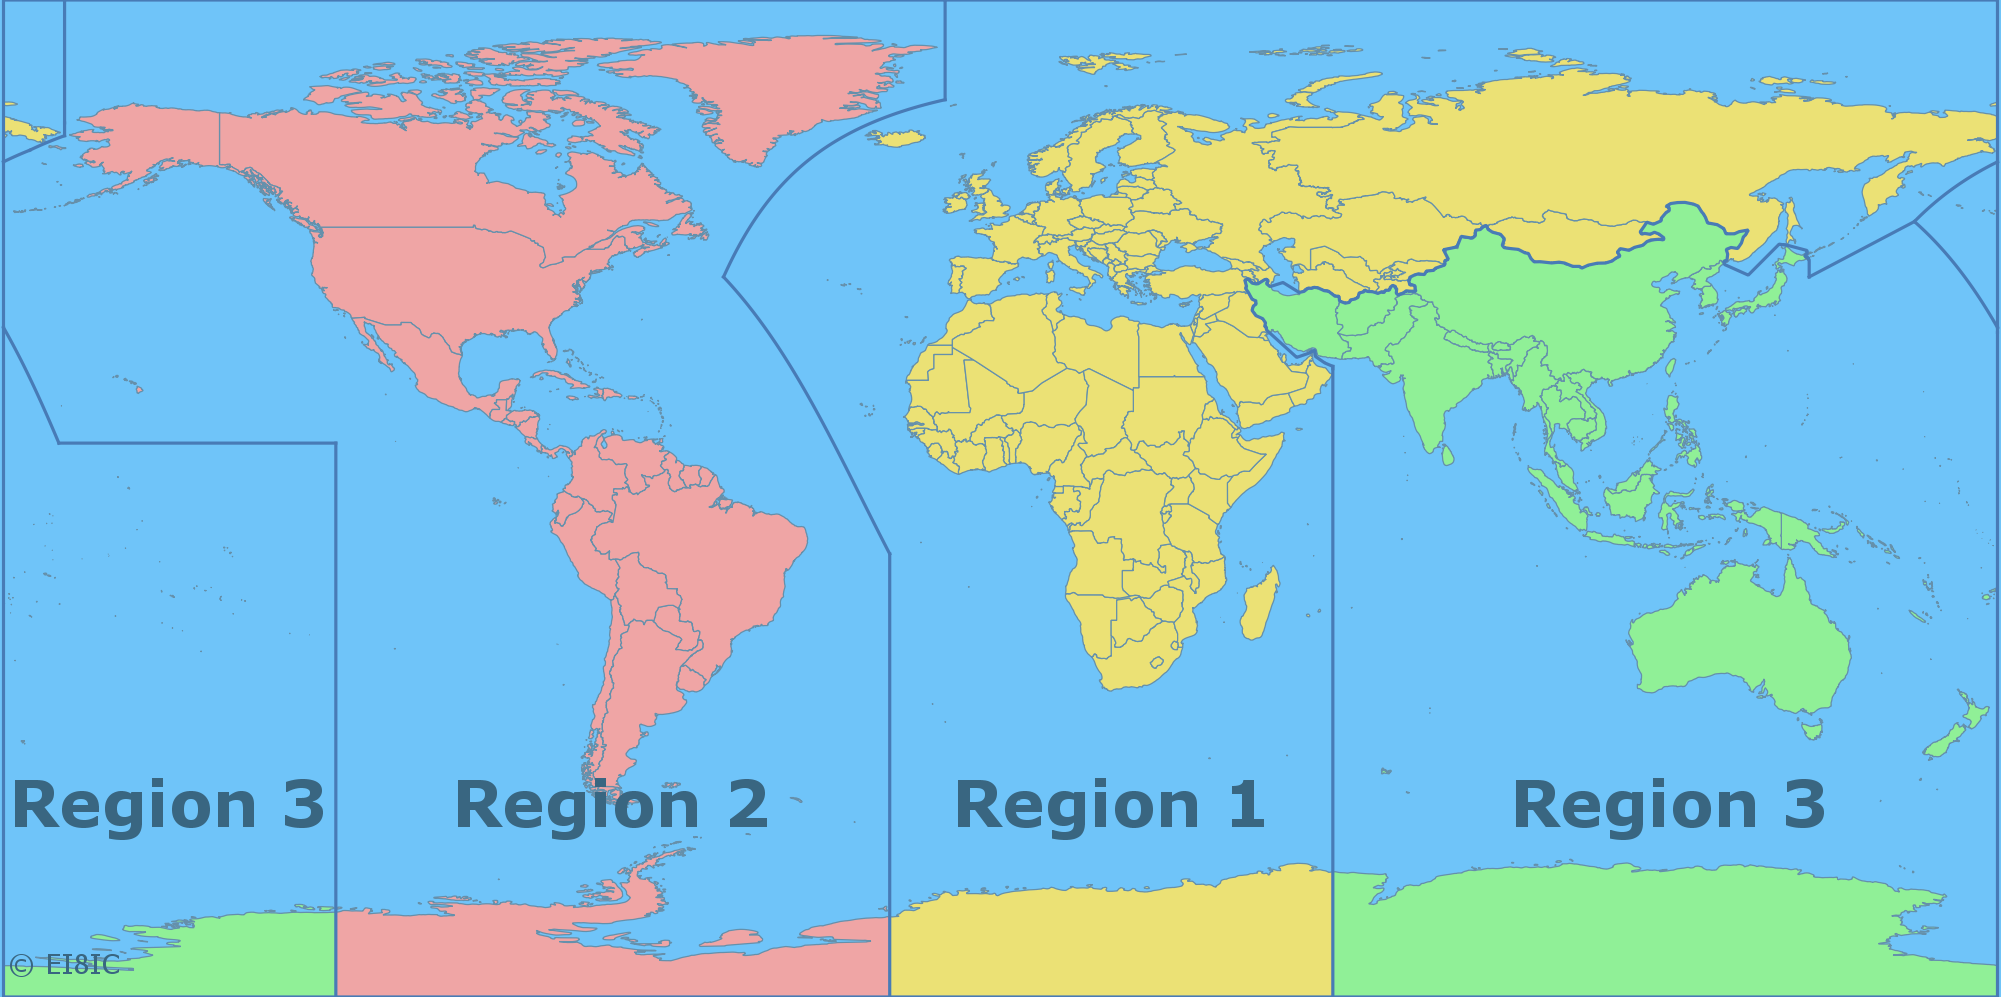 ITU region map from https://www.mapability.com/ei8ic/maps/regions.php